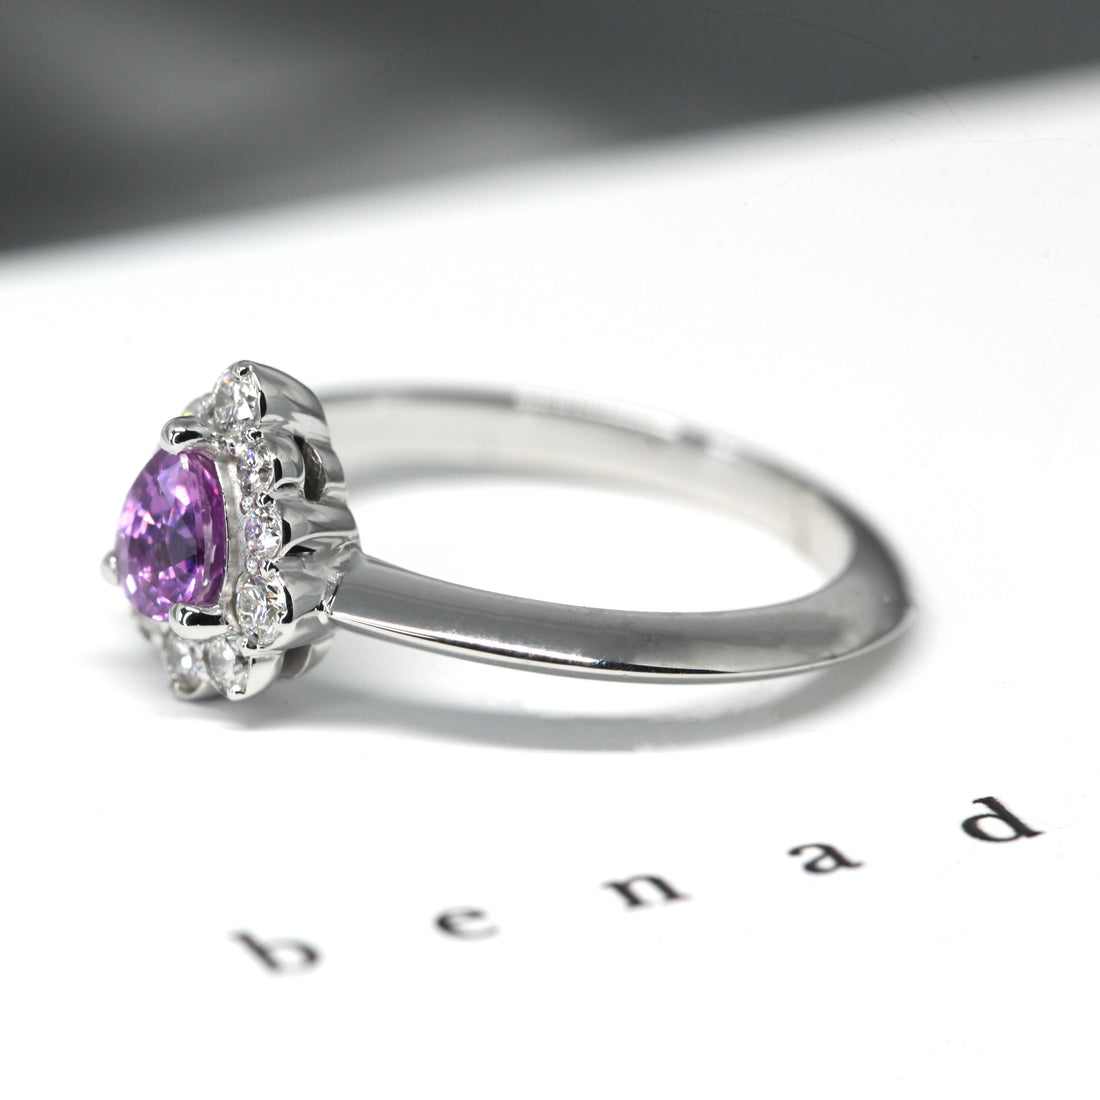 sharpe engagement ring purple sapphire pear shape gemstone bena jewelry montreal